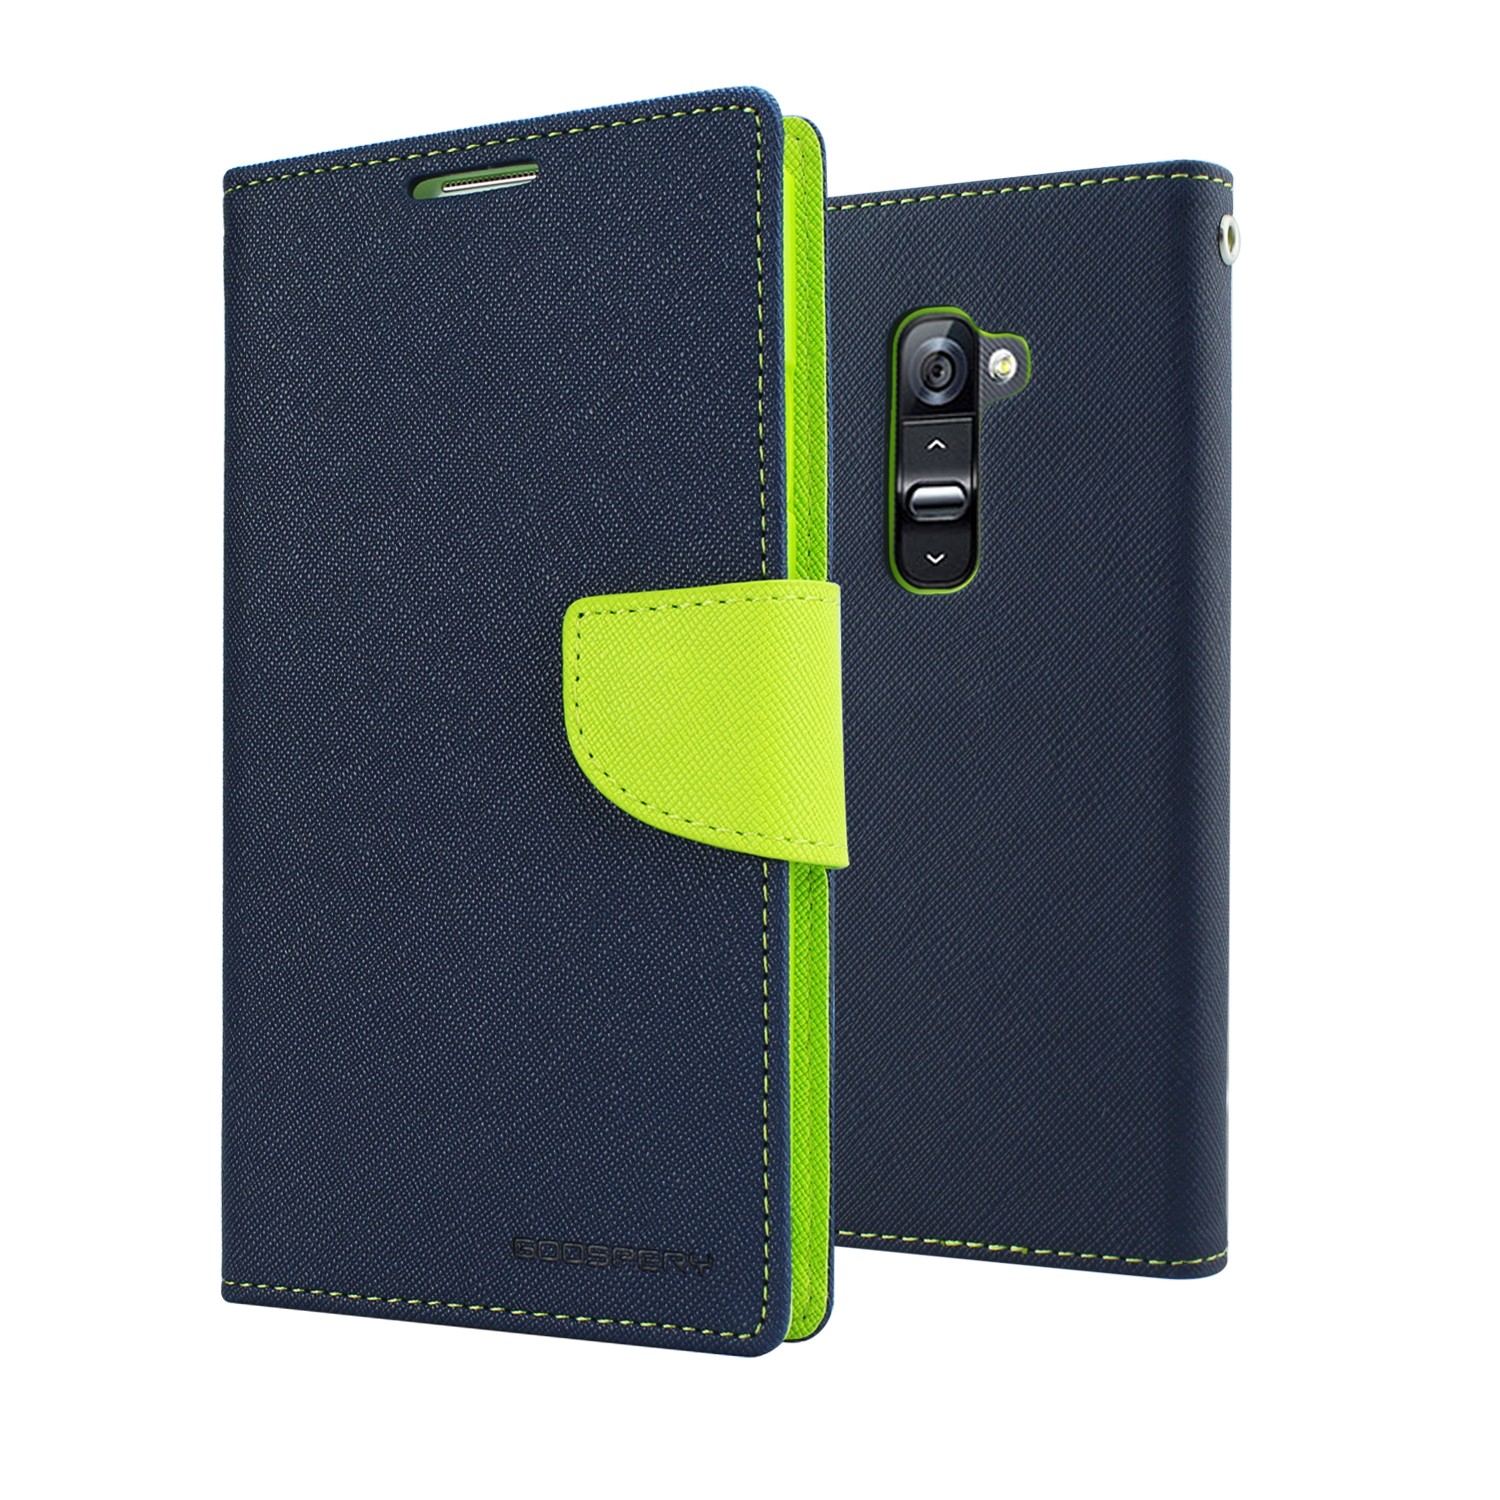 Fancy Diary Folio flipové pouzdro pro Samsung Galaxy S5 modré/limetkové